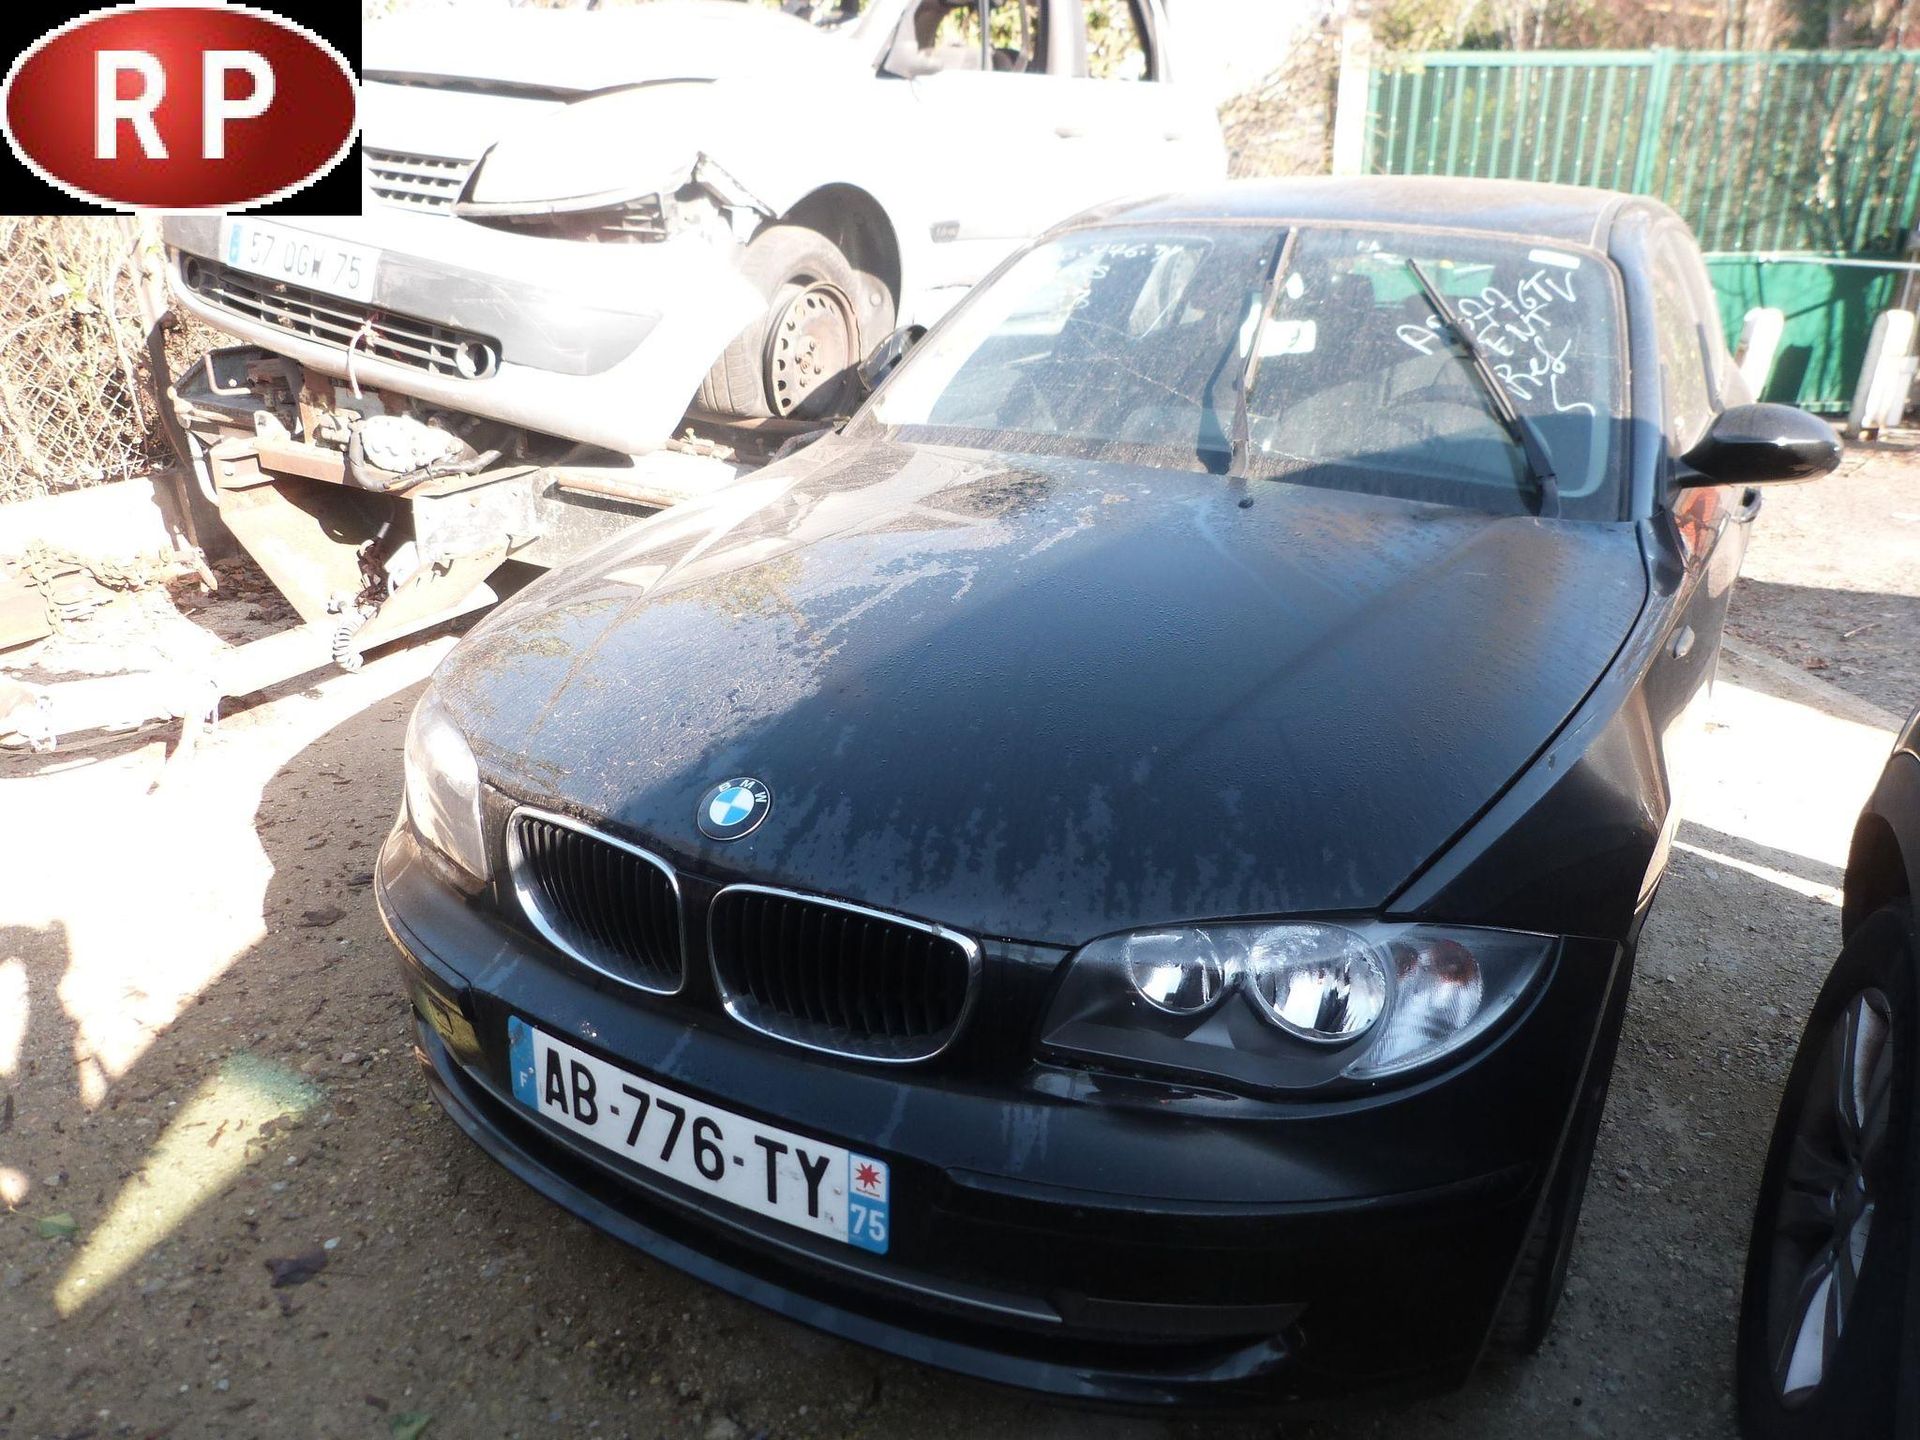 Null [RP] BMW Serie 1 2.0 d 143, Diesel, imm. AB-776-TY, type MBM5664NV699, seri&hellip;